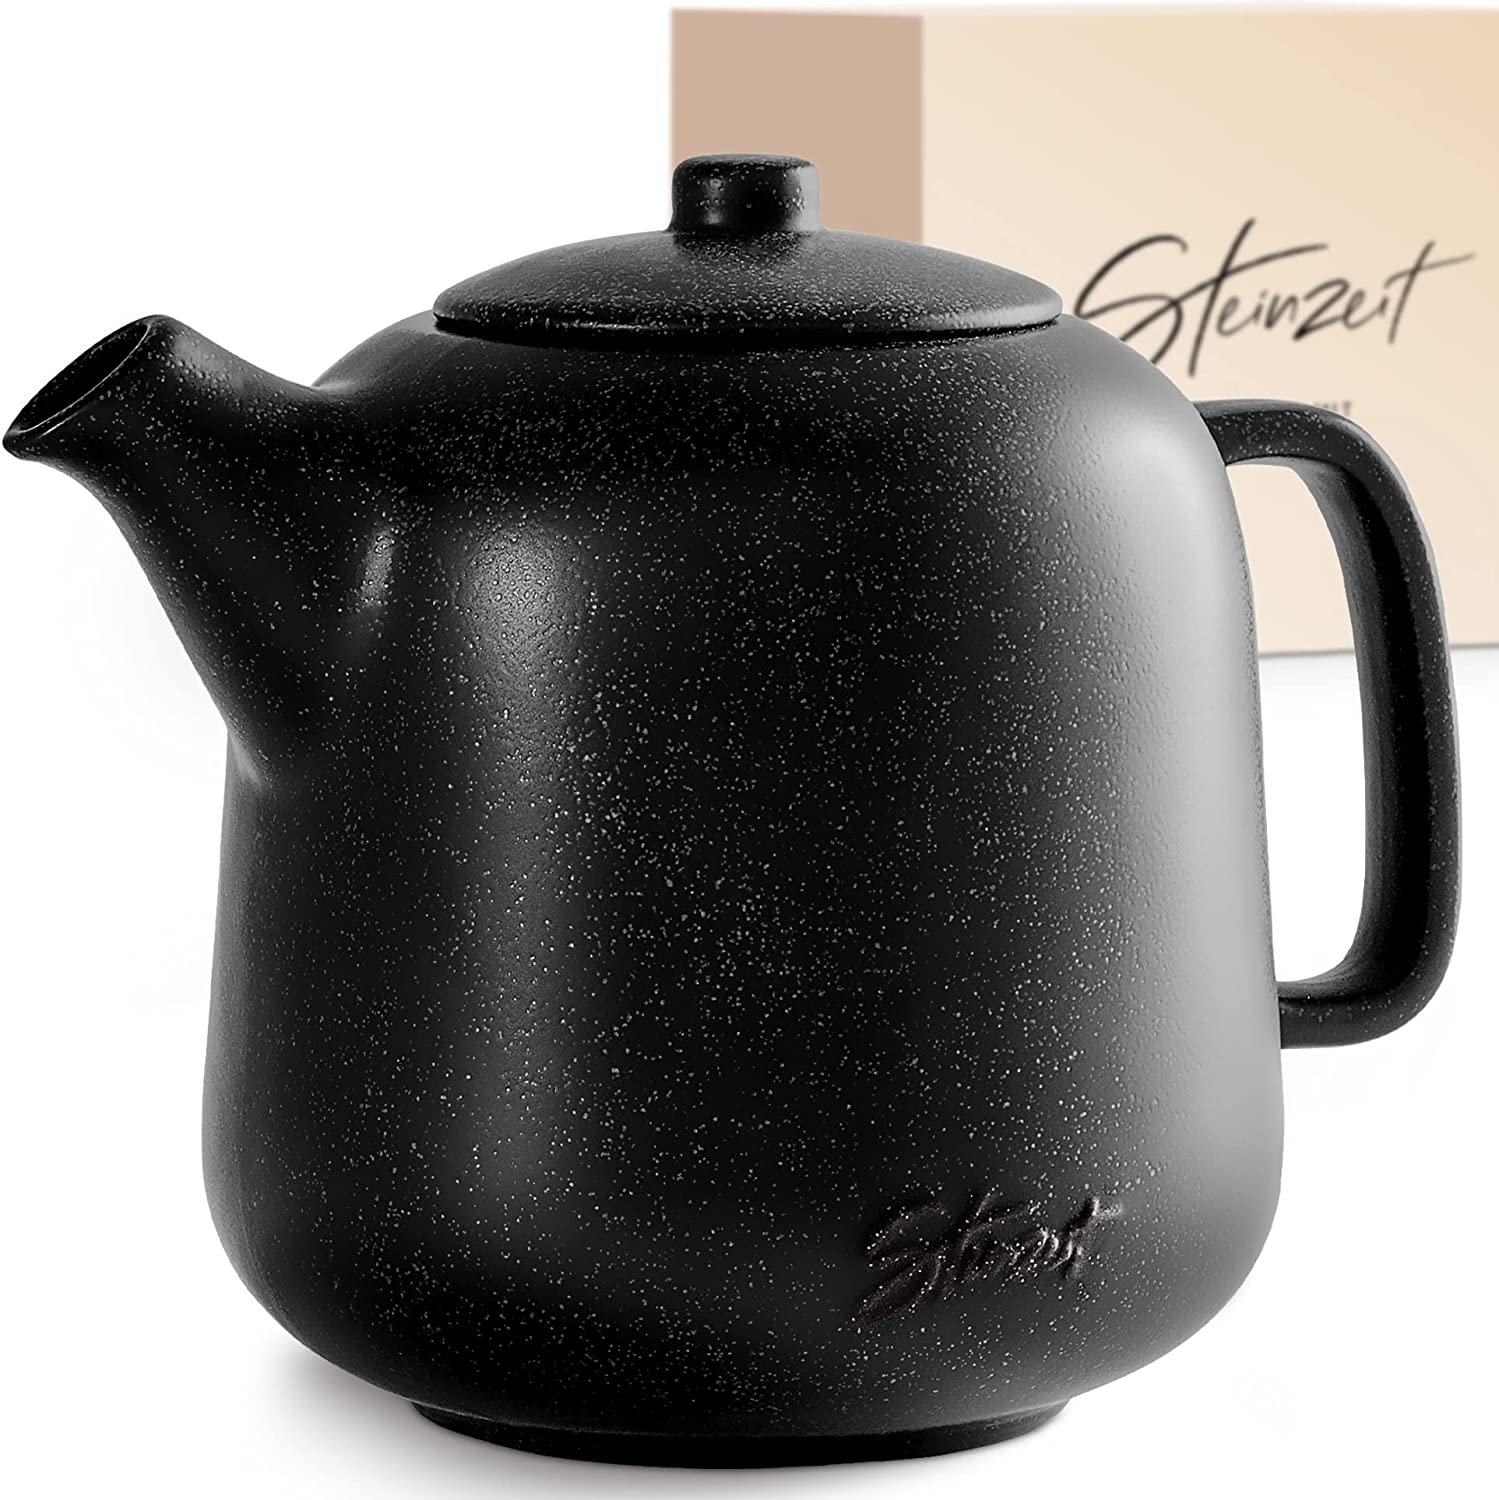 Steinzeit Designer Teapot (1.3 L) - Teapot with Strainer Insert Made of 304 Stainless Steel - Ceramic Teapot with Unique Glaze - Removable Teapot with Strainer - Teapot Black